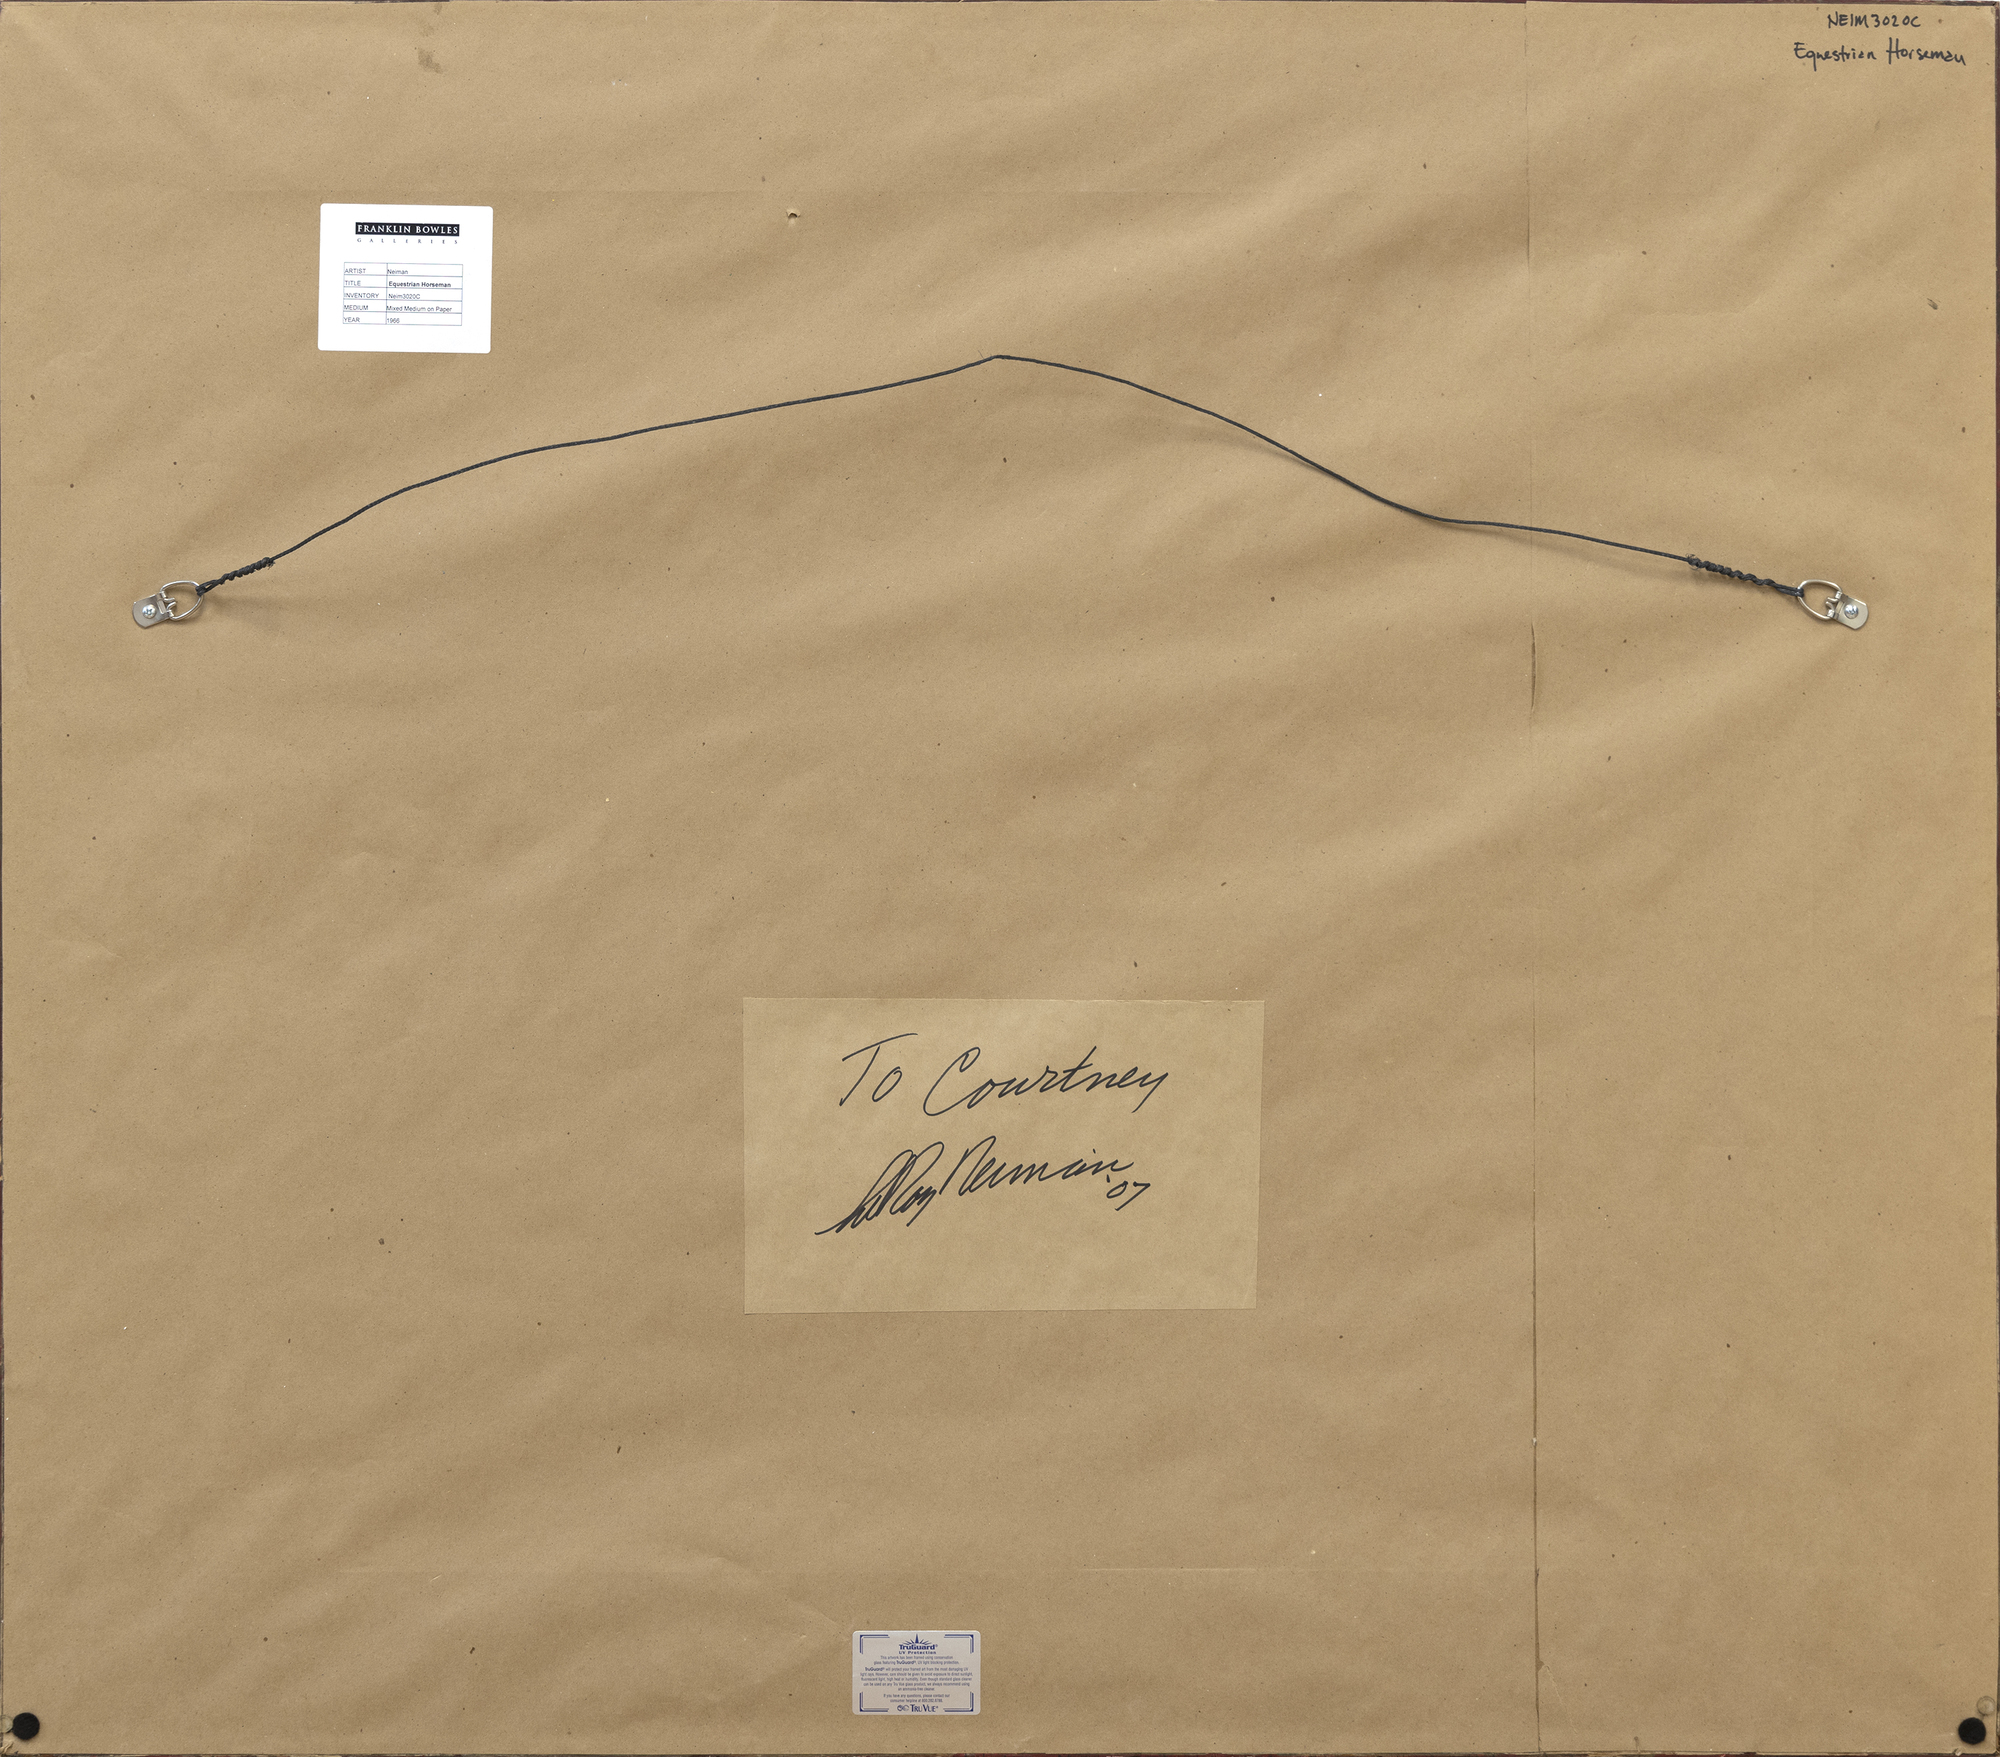 LEROY NEIMAN - 马术骑手 - 纸上混合媒体 - 22 x 28 英寸。